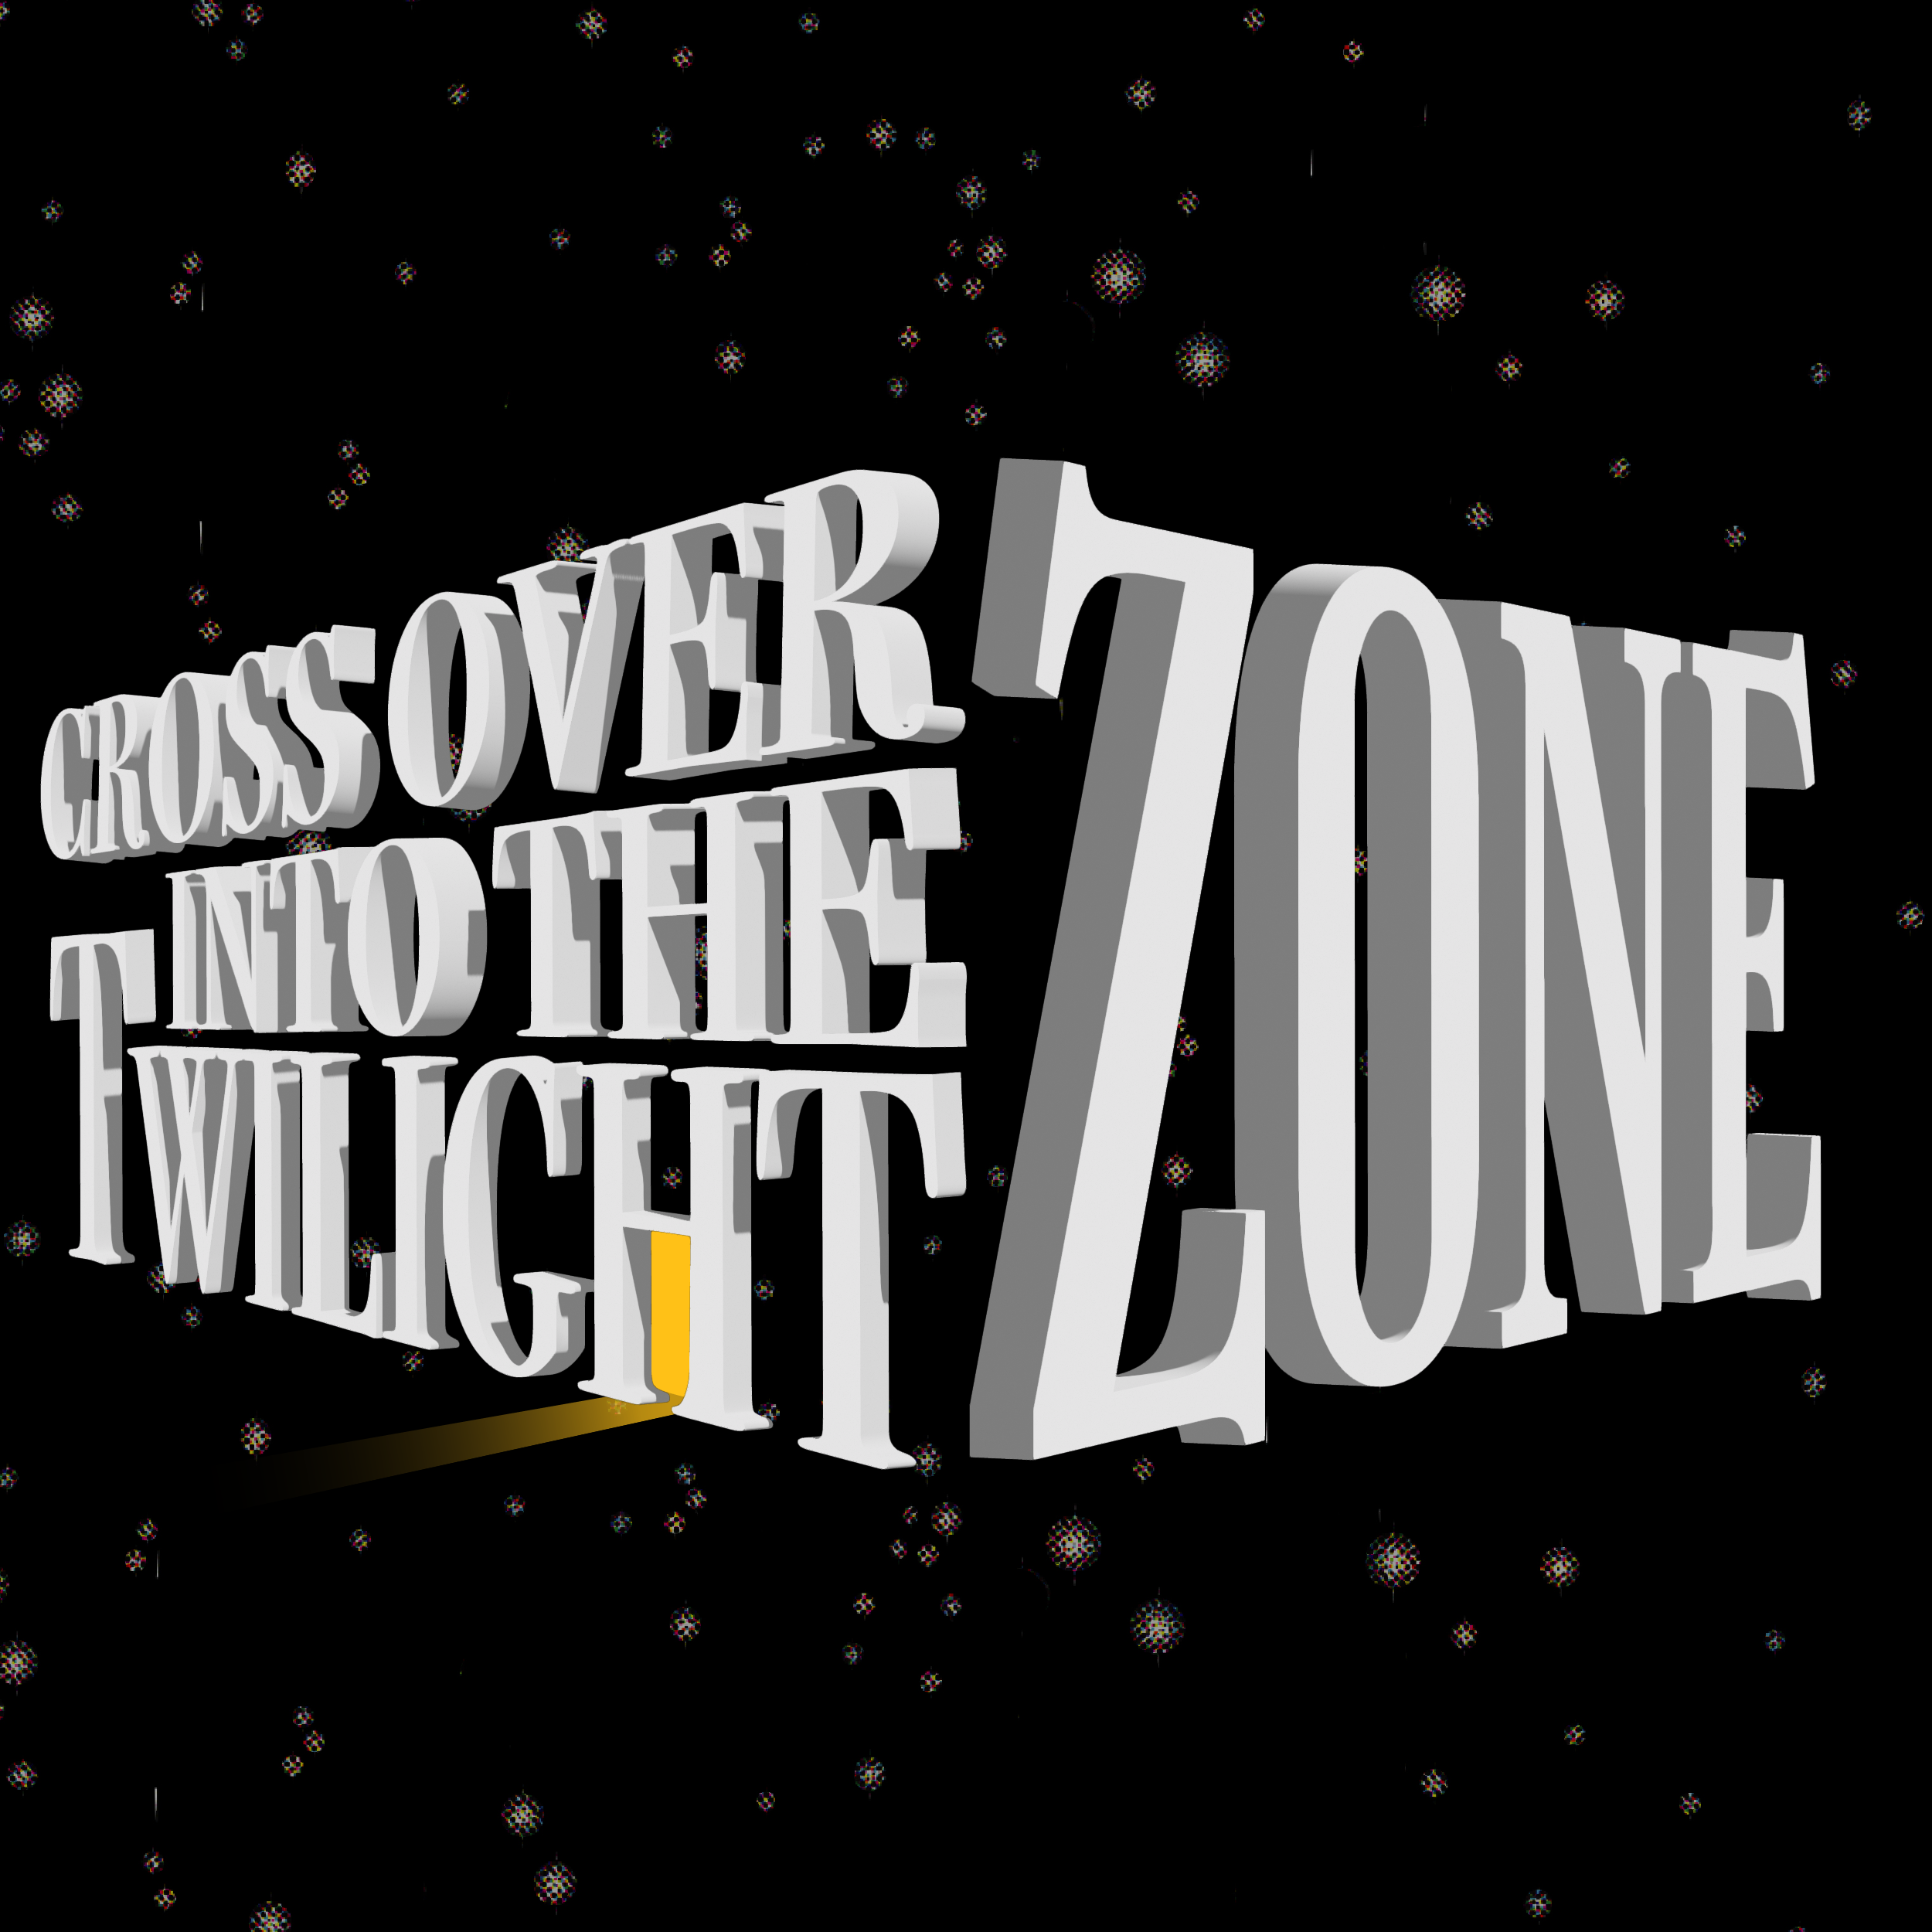 Cross over into the Twilight Zone